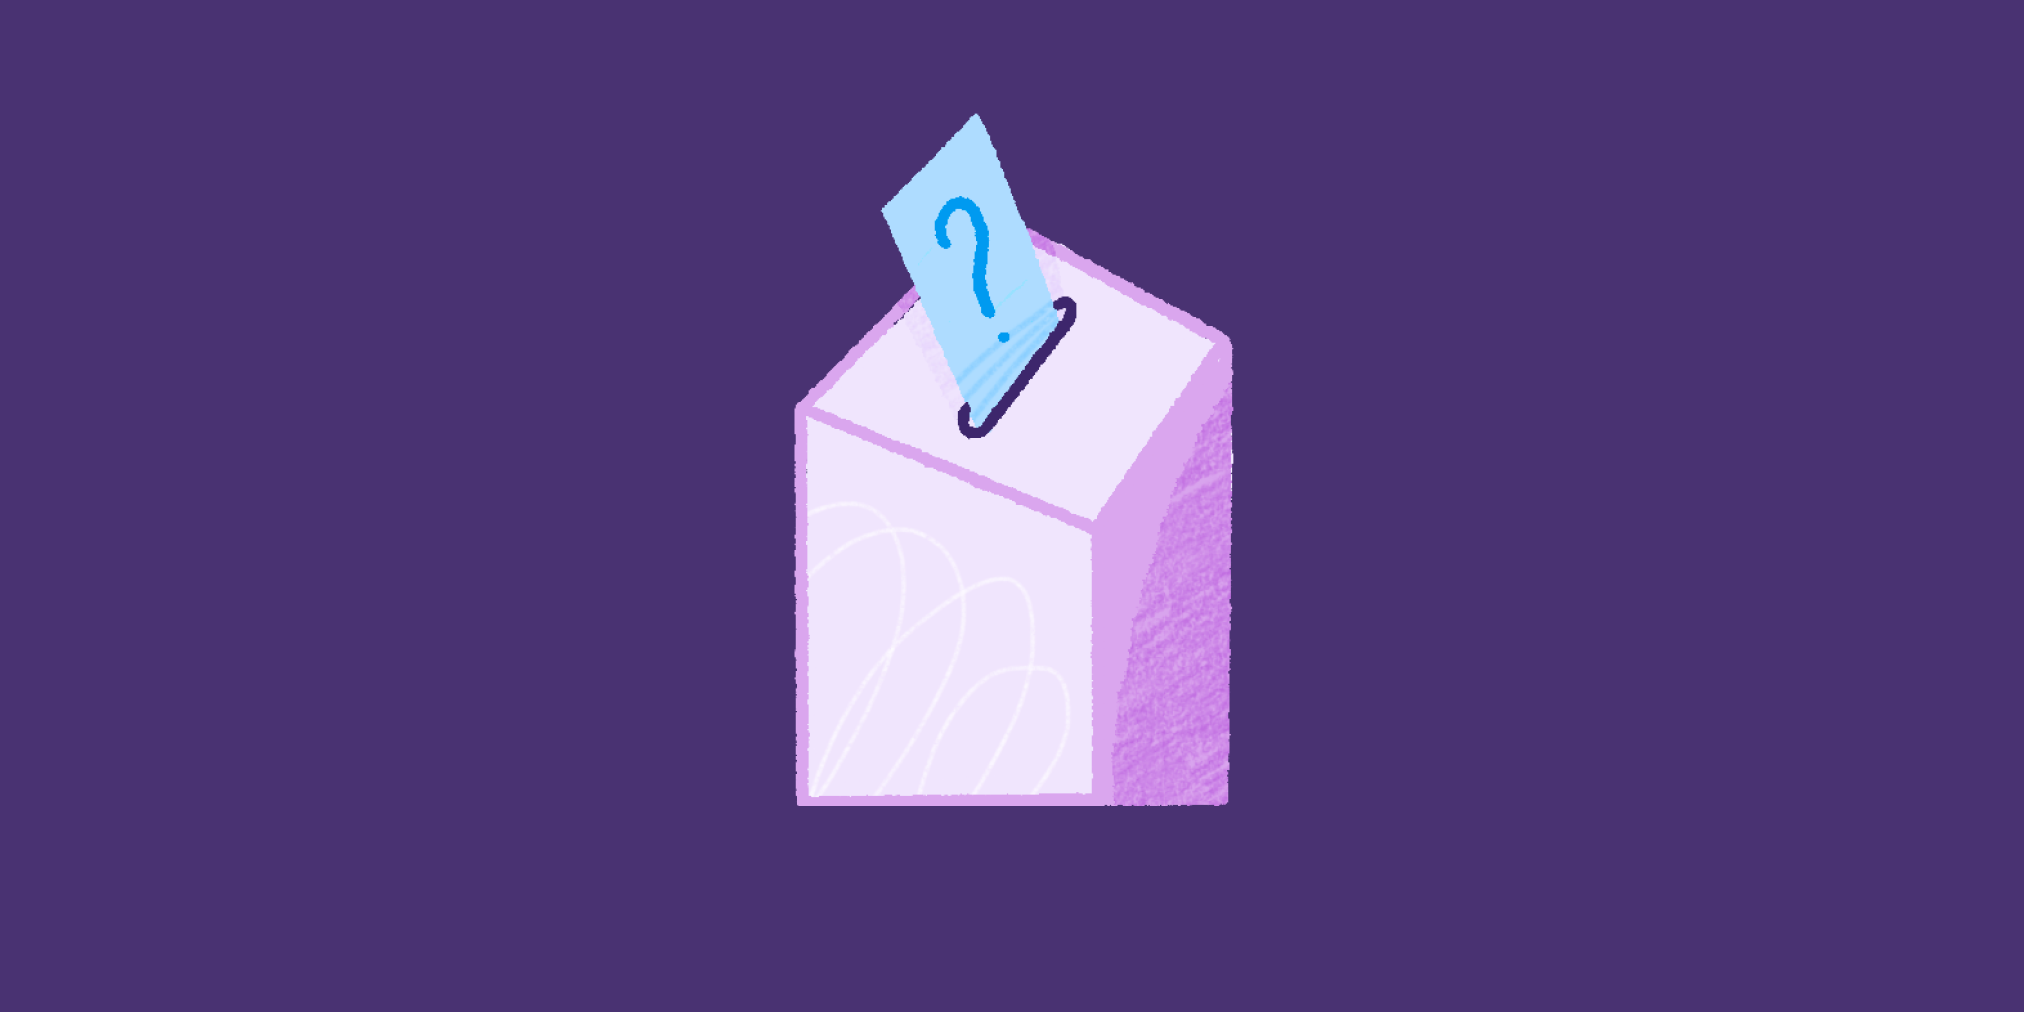 a decorative image of a ballot box on a purple background